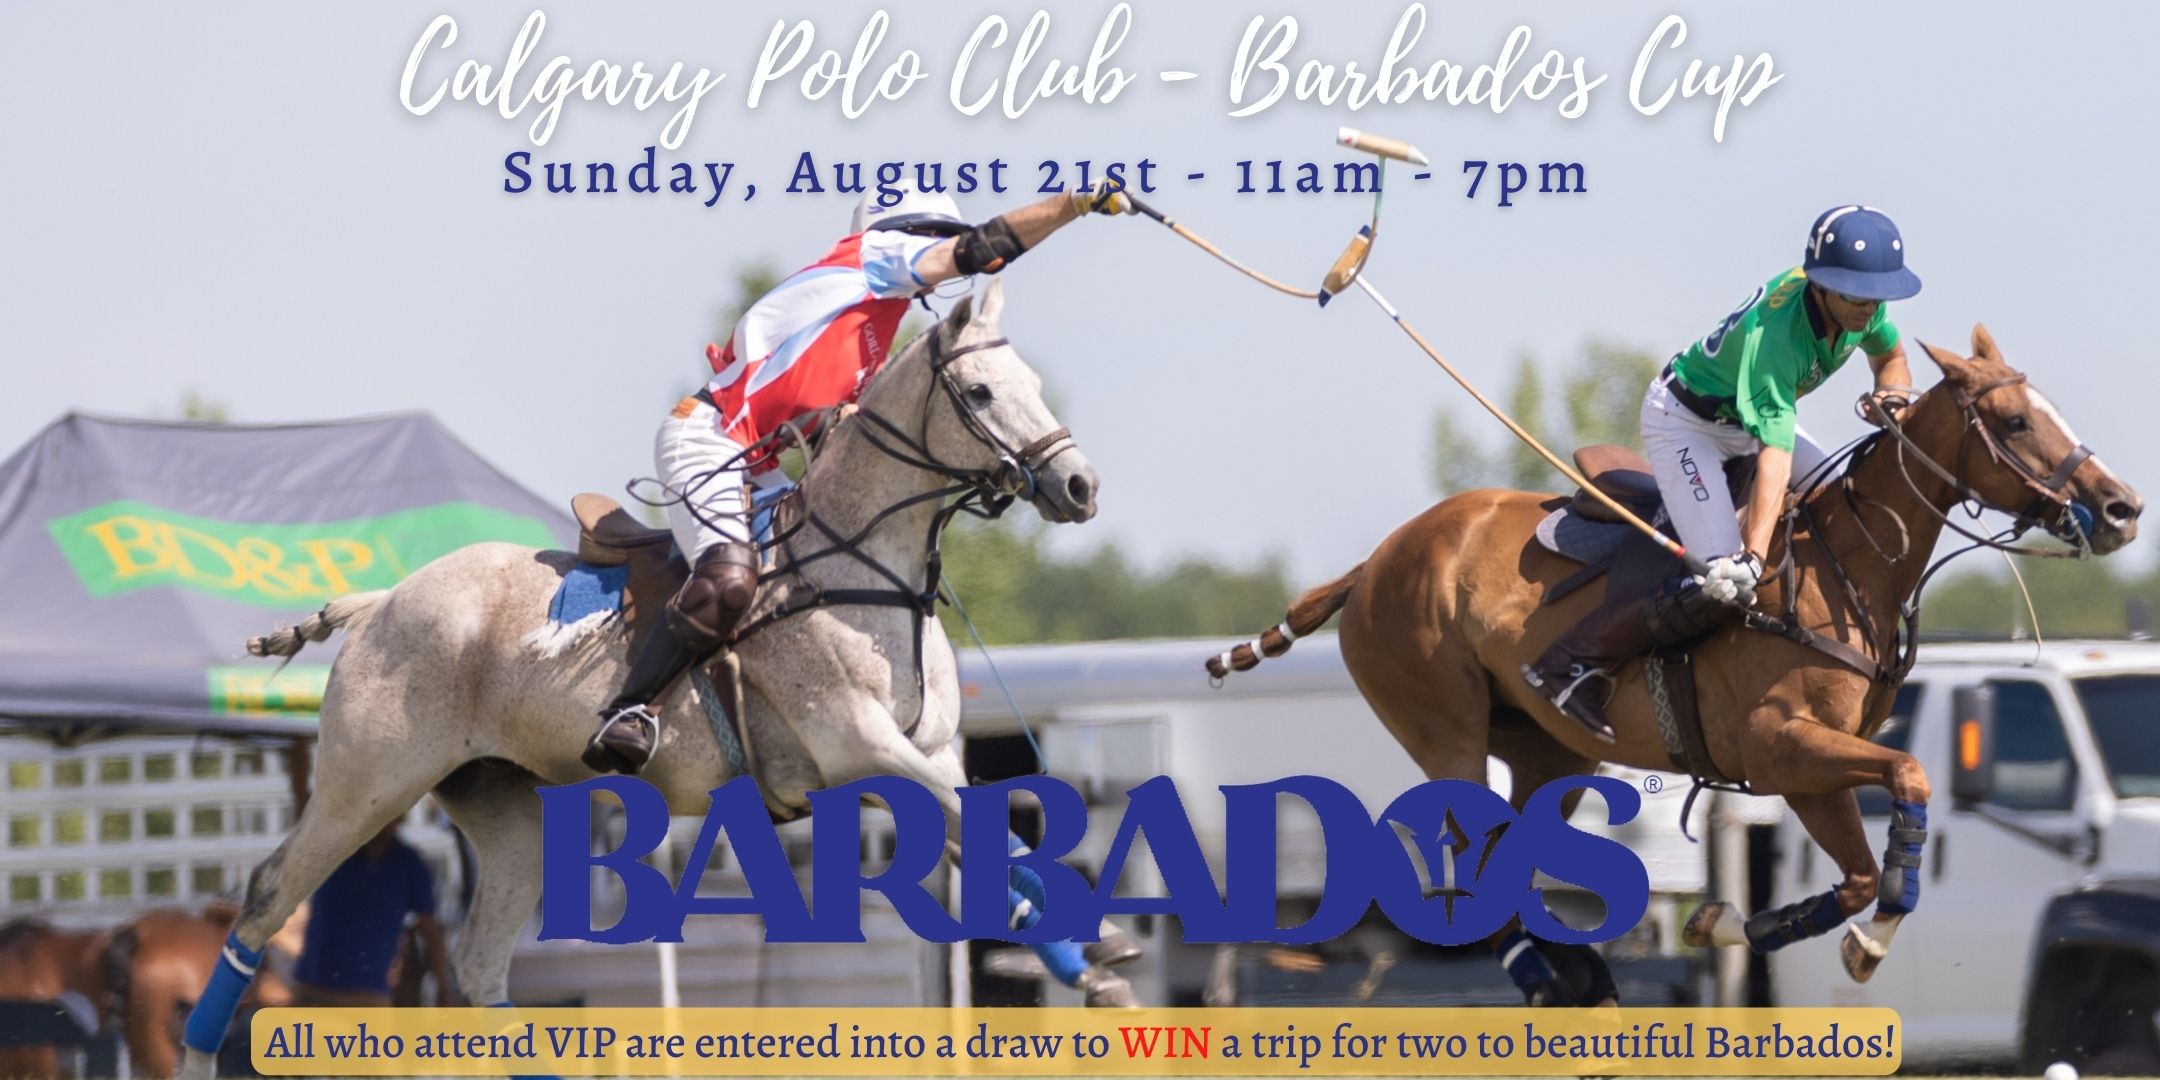 Barbados Calgary Polo Club